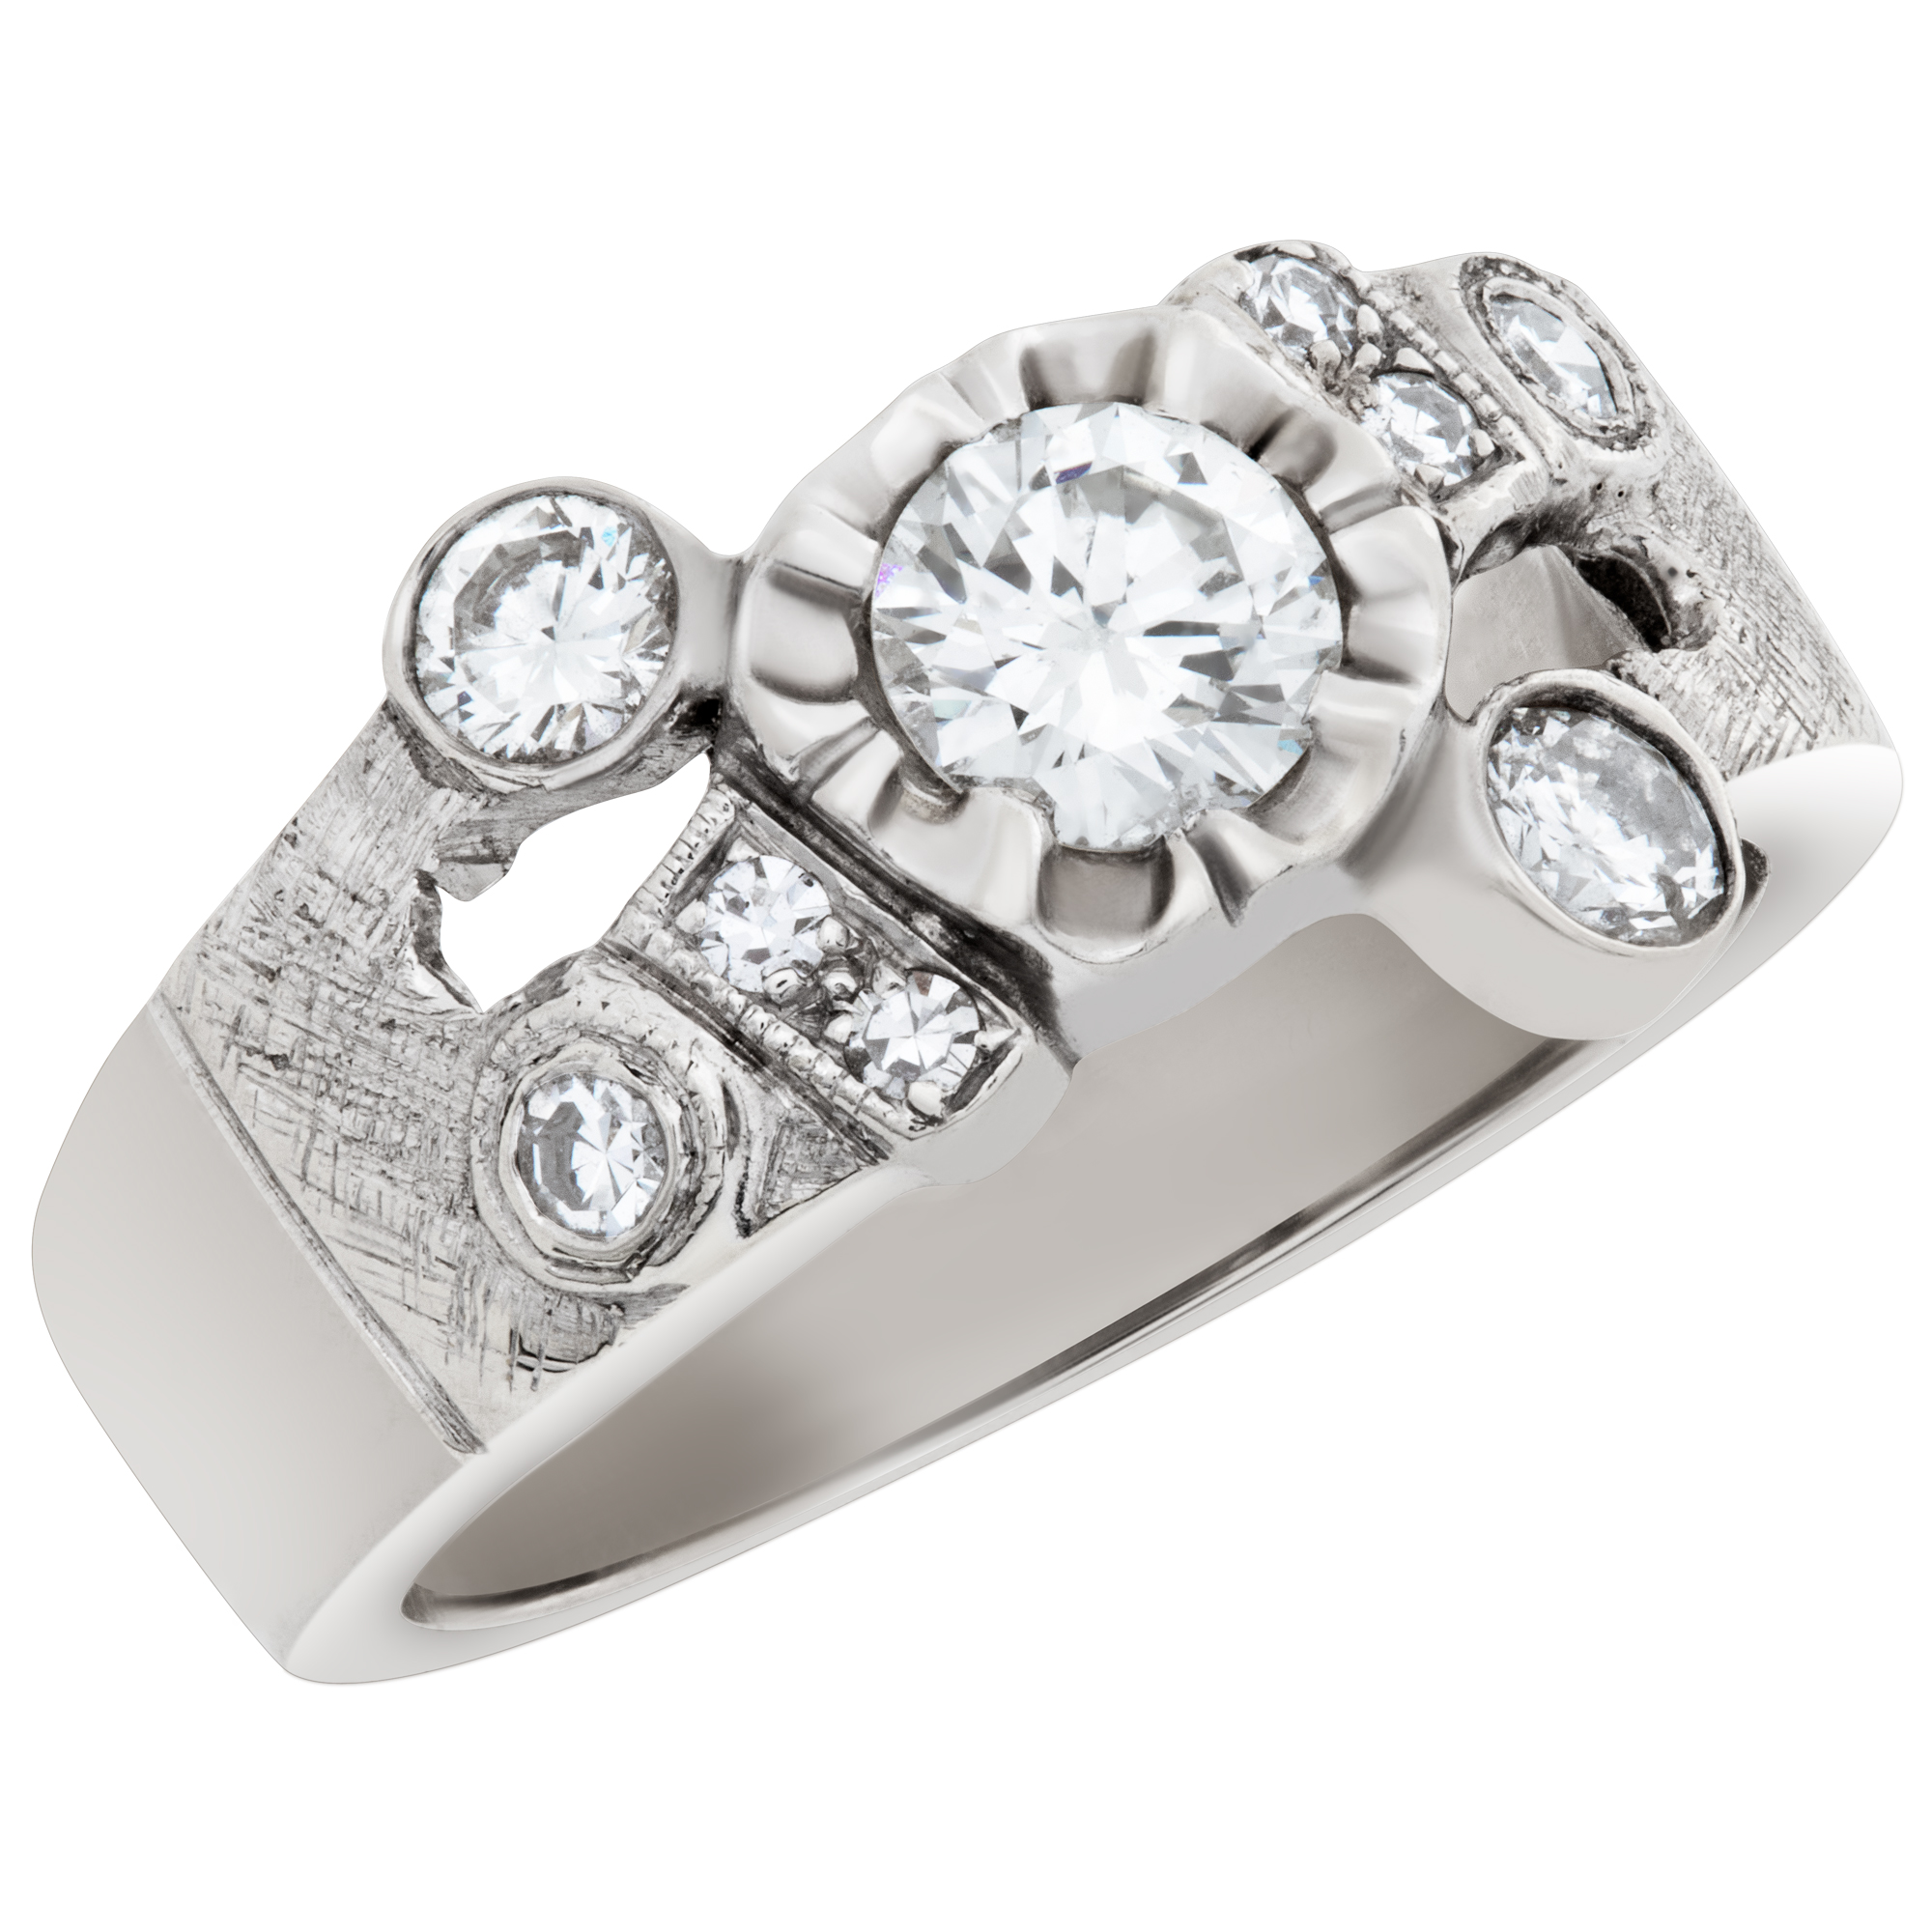 Diamond ring in 14k white gold. 0.80 carats in diamonds. Size 6.25 image 3